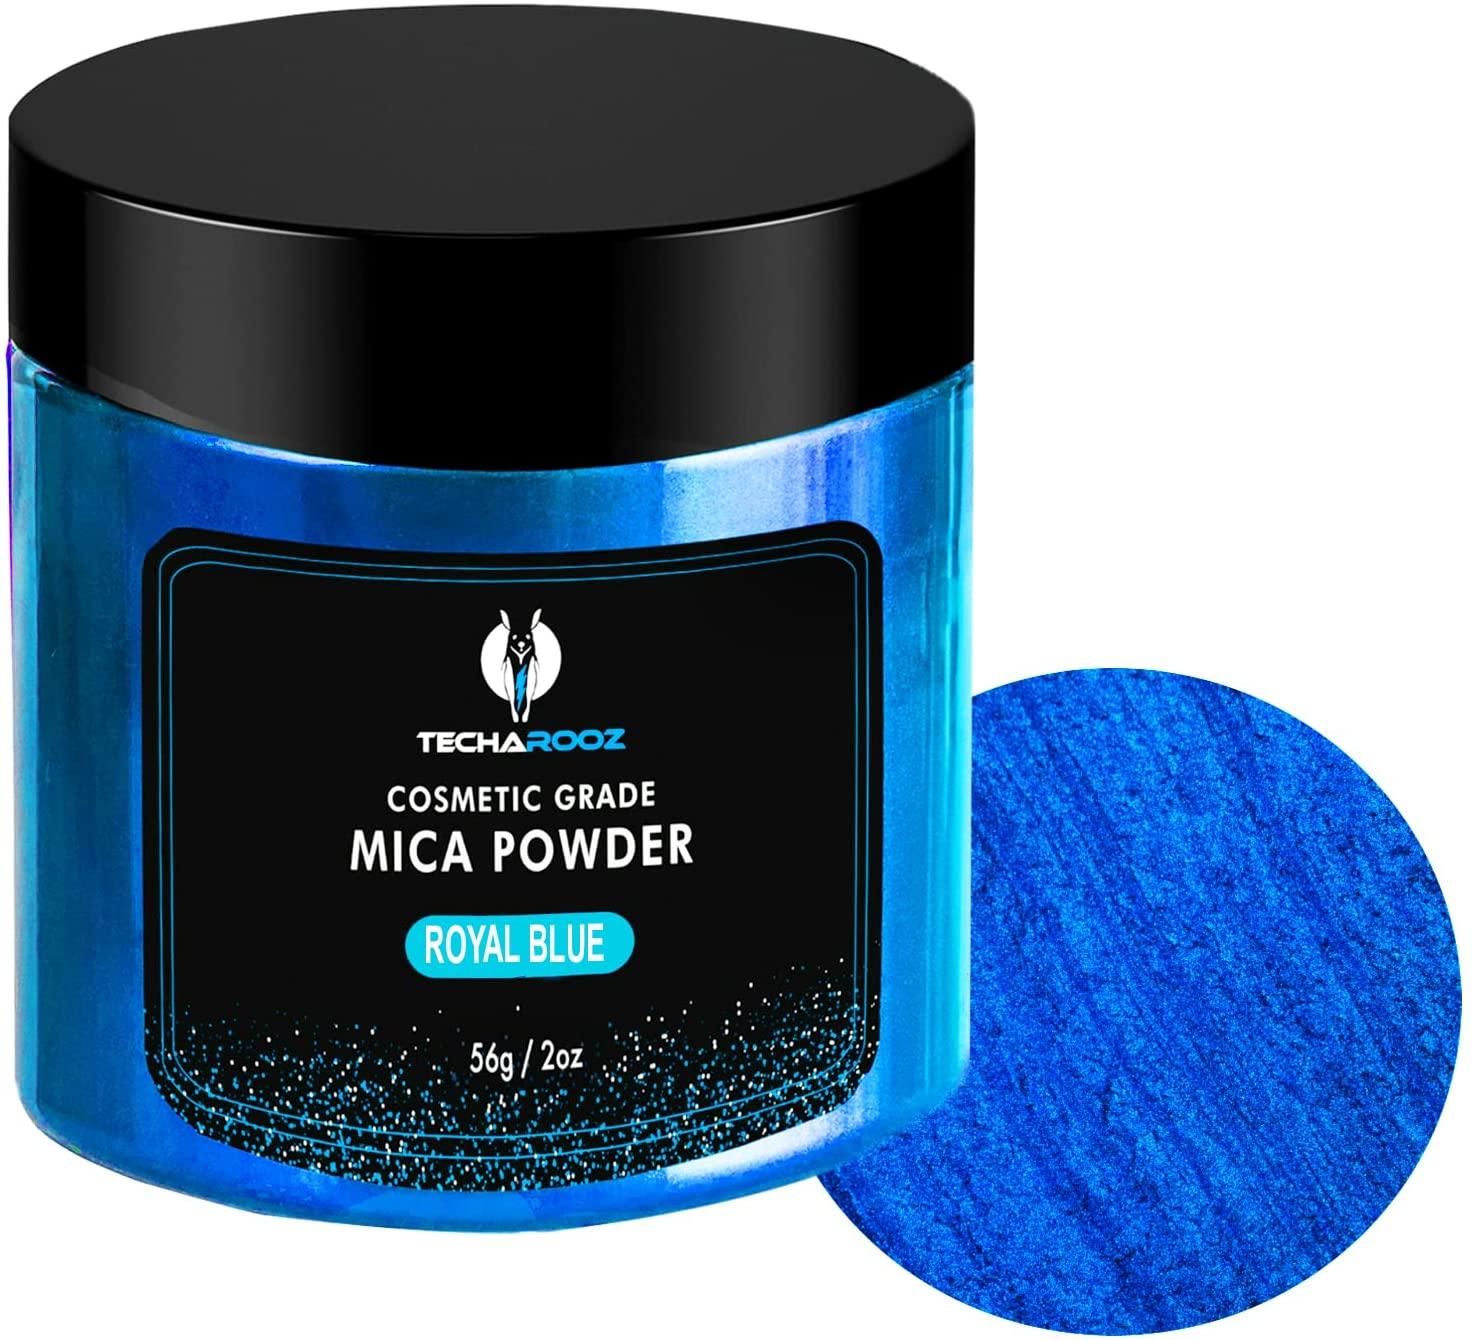 U.S. Art Supply Jewelescent Royal Blue Mica Pearl Powder Pigment, 2 oz (57g) Bottle - Non-Toxic Metallic Color Dye